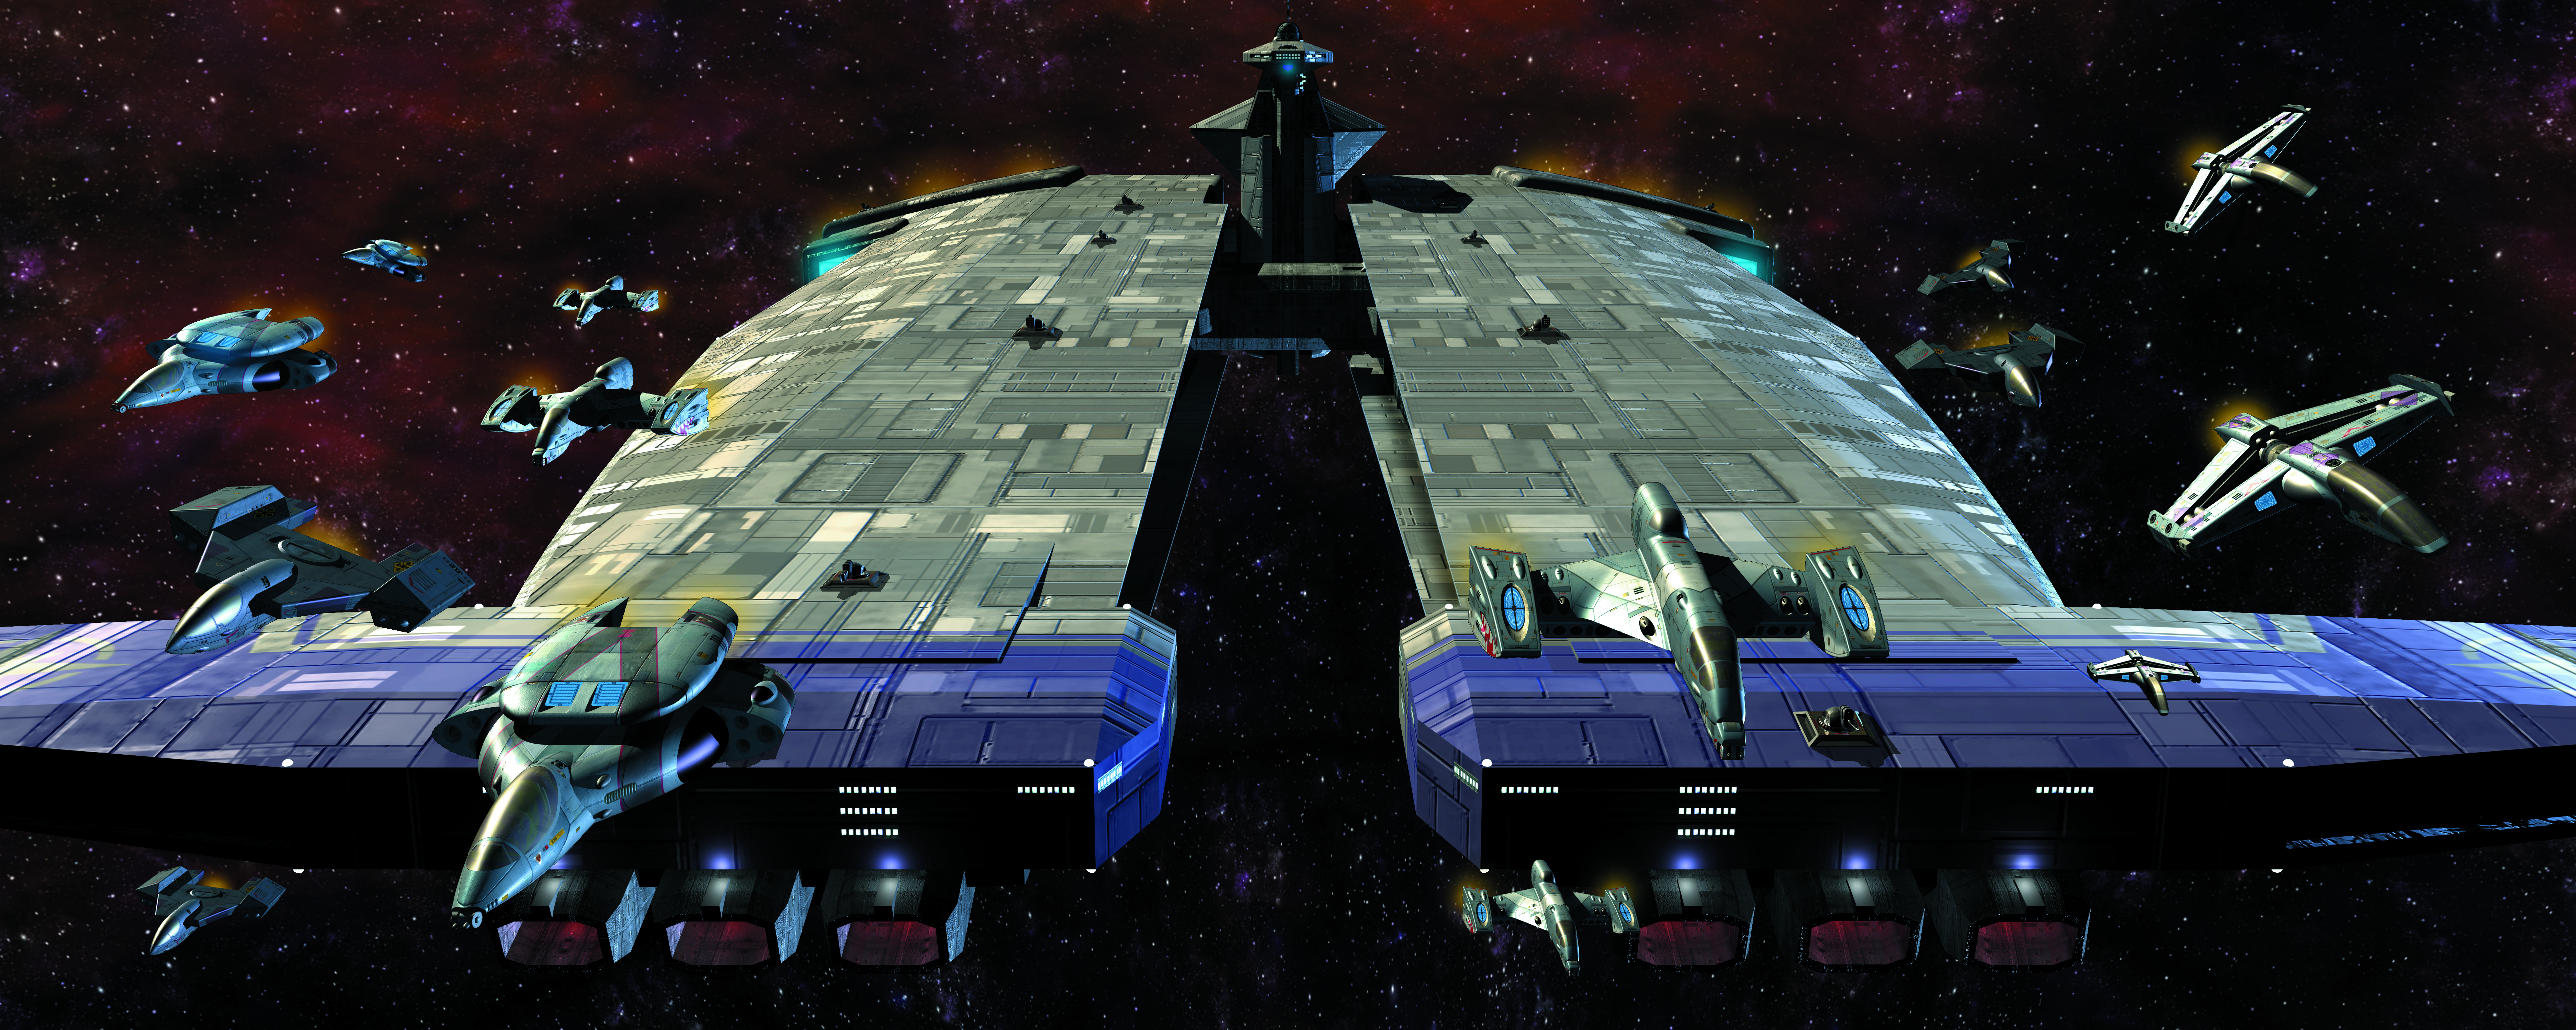 Wing Commander: Prophecy Backgrounds, Compatible - PC, Mobile, Gadgets| 7500x3000 px